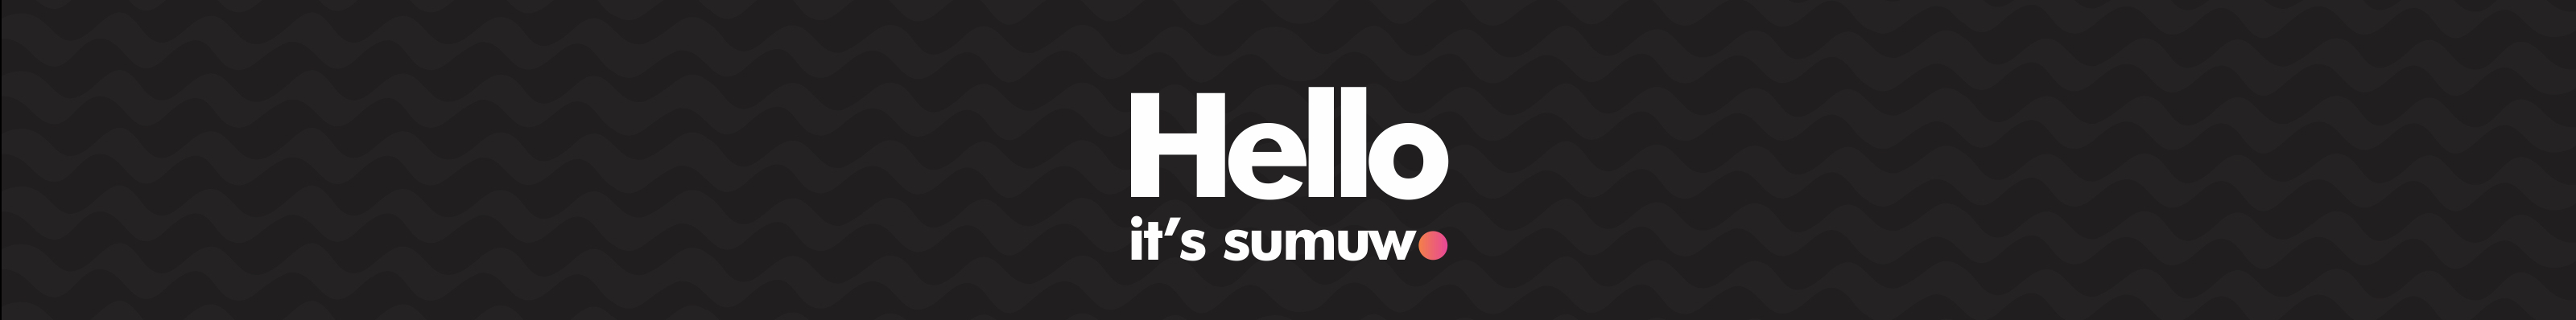 sumuw advertising's profile banner